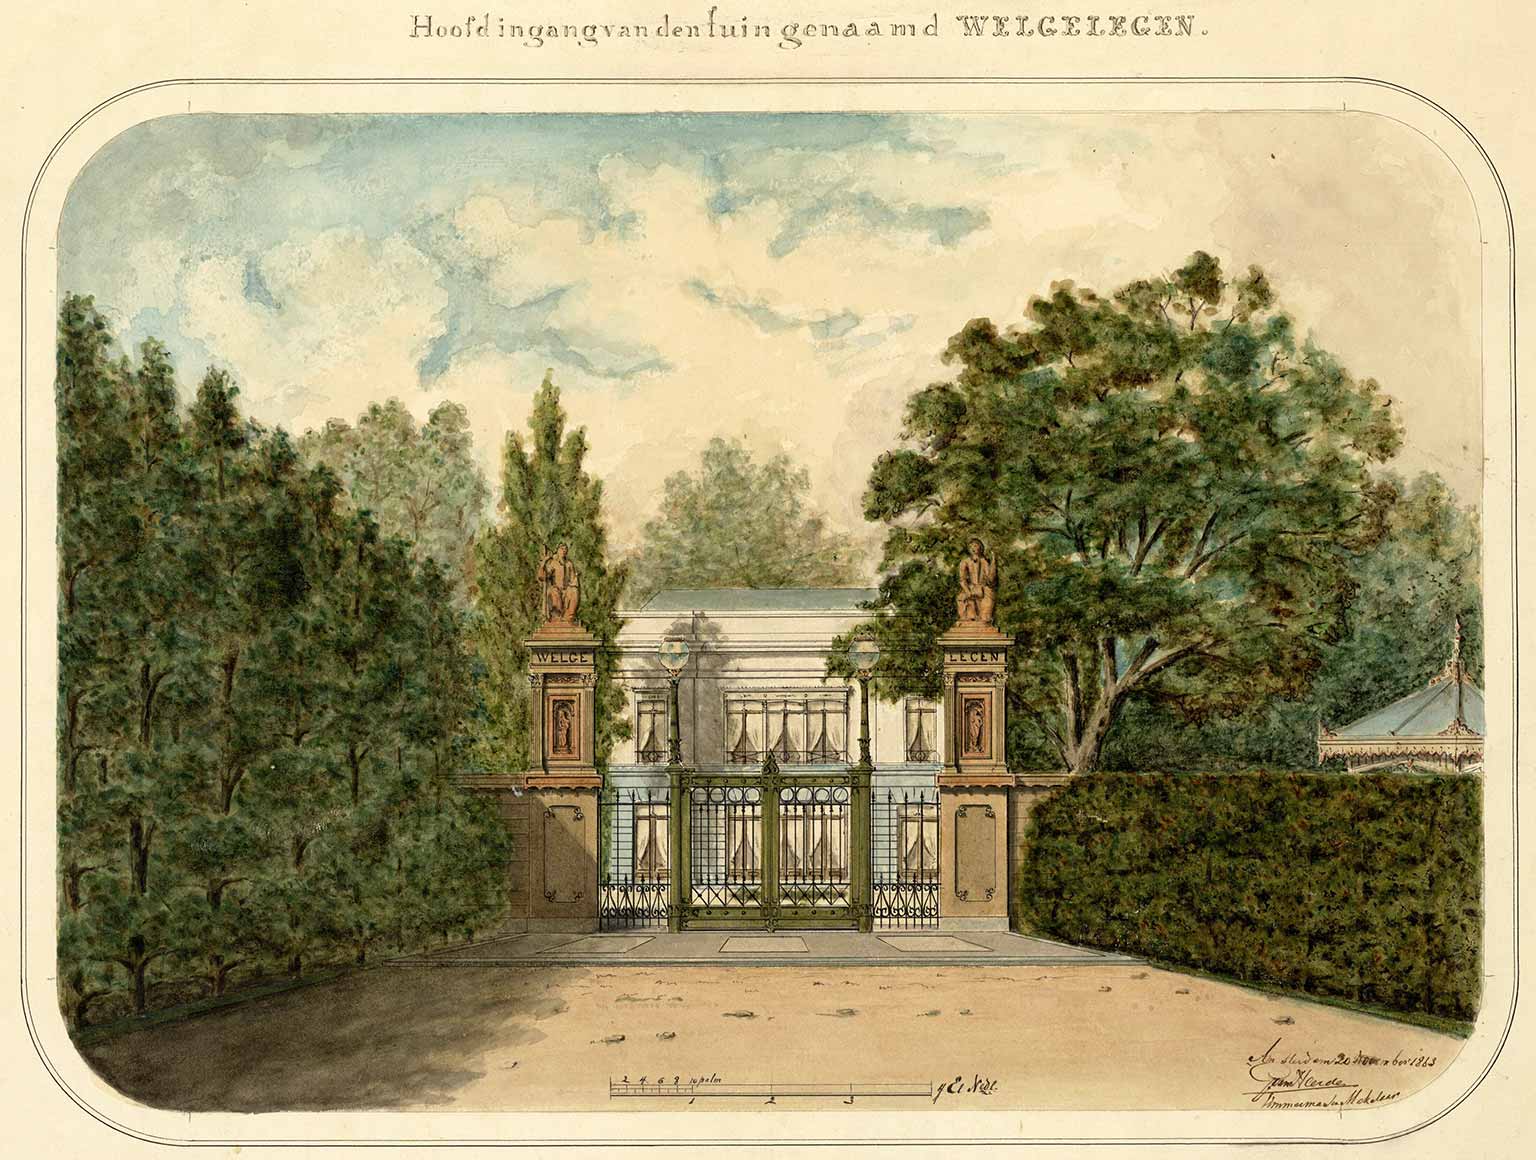 Welgelegen tavern, Amsterdam, in 1863, then the Westerplantsoen park